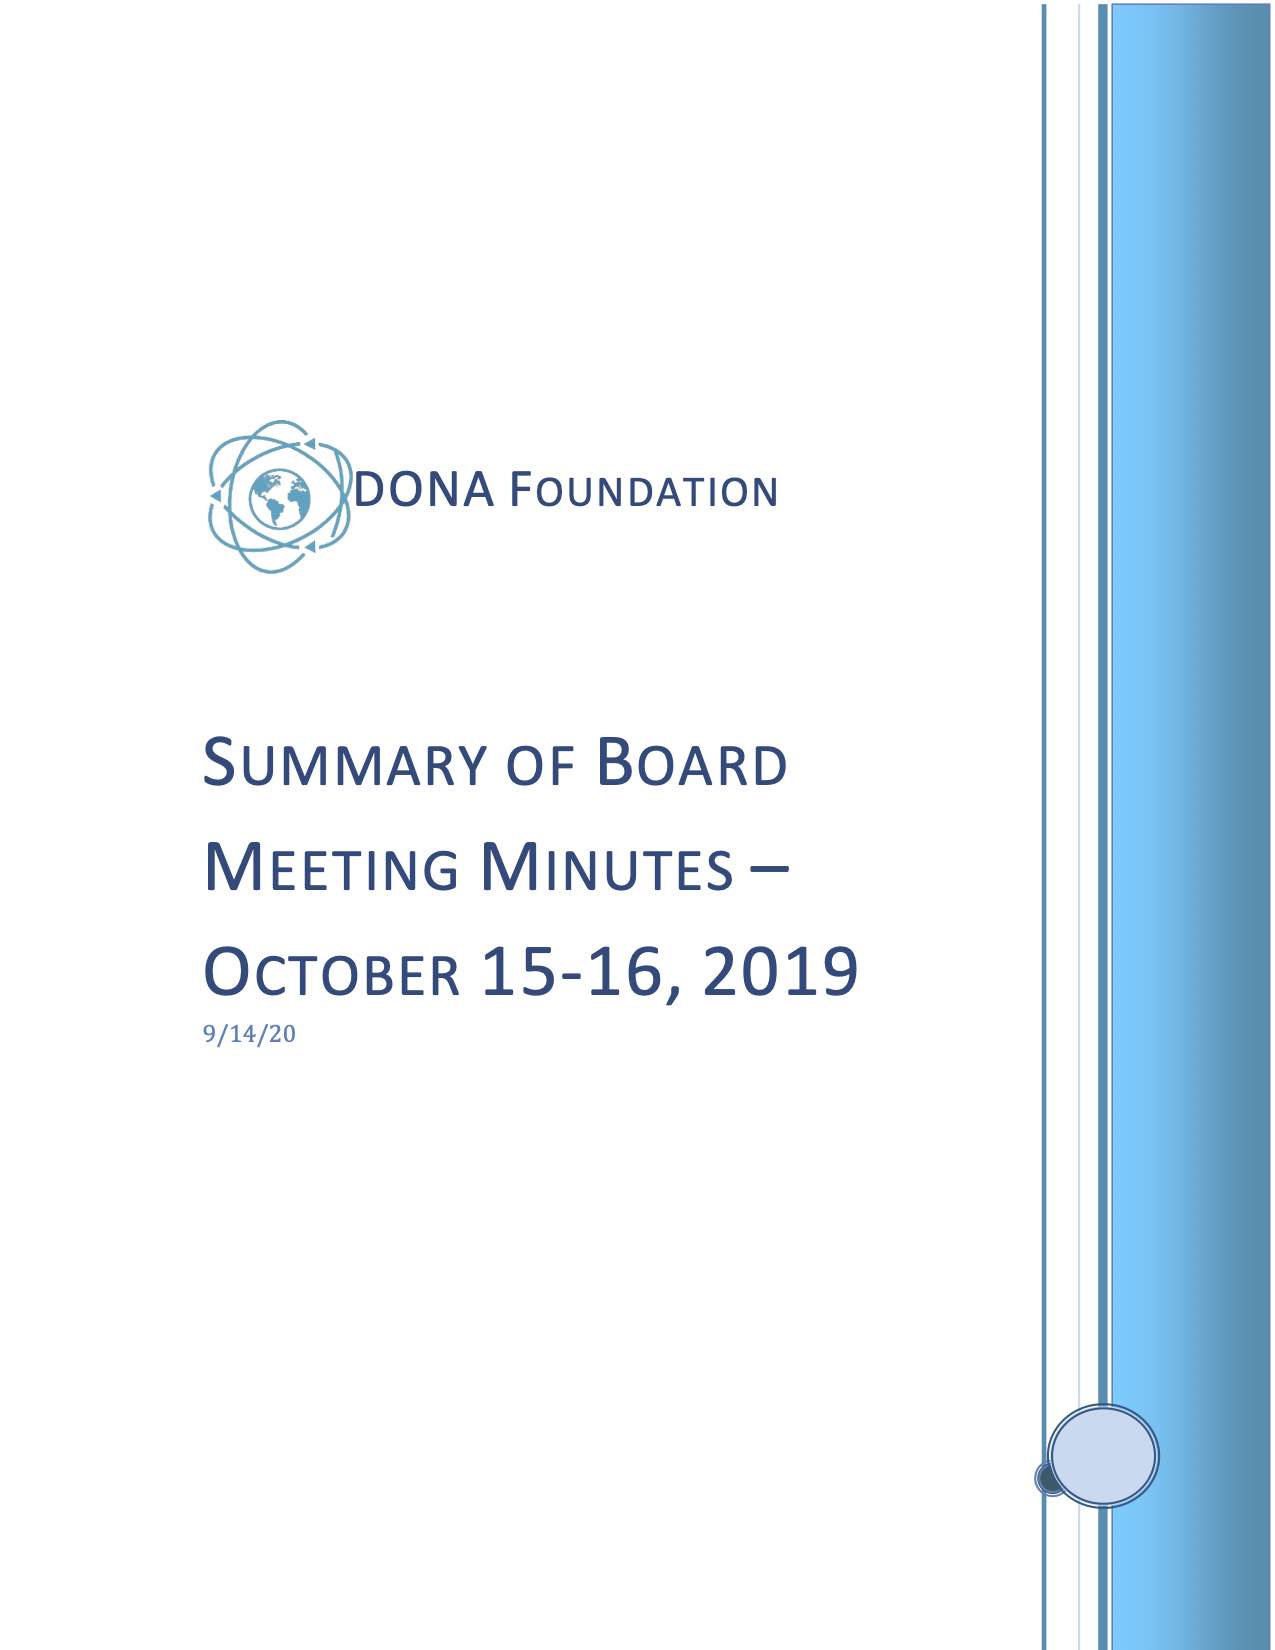 Summary of Board Minutes October 15-16, 2019